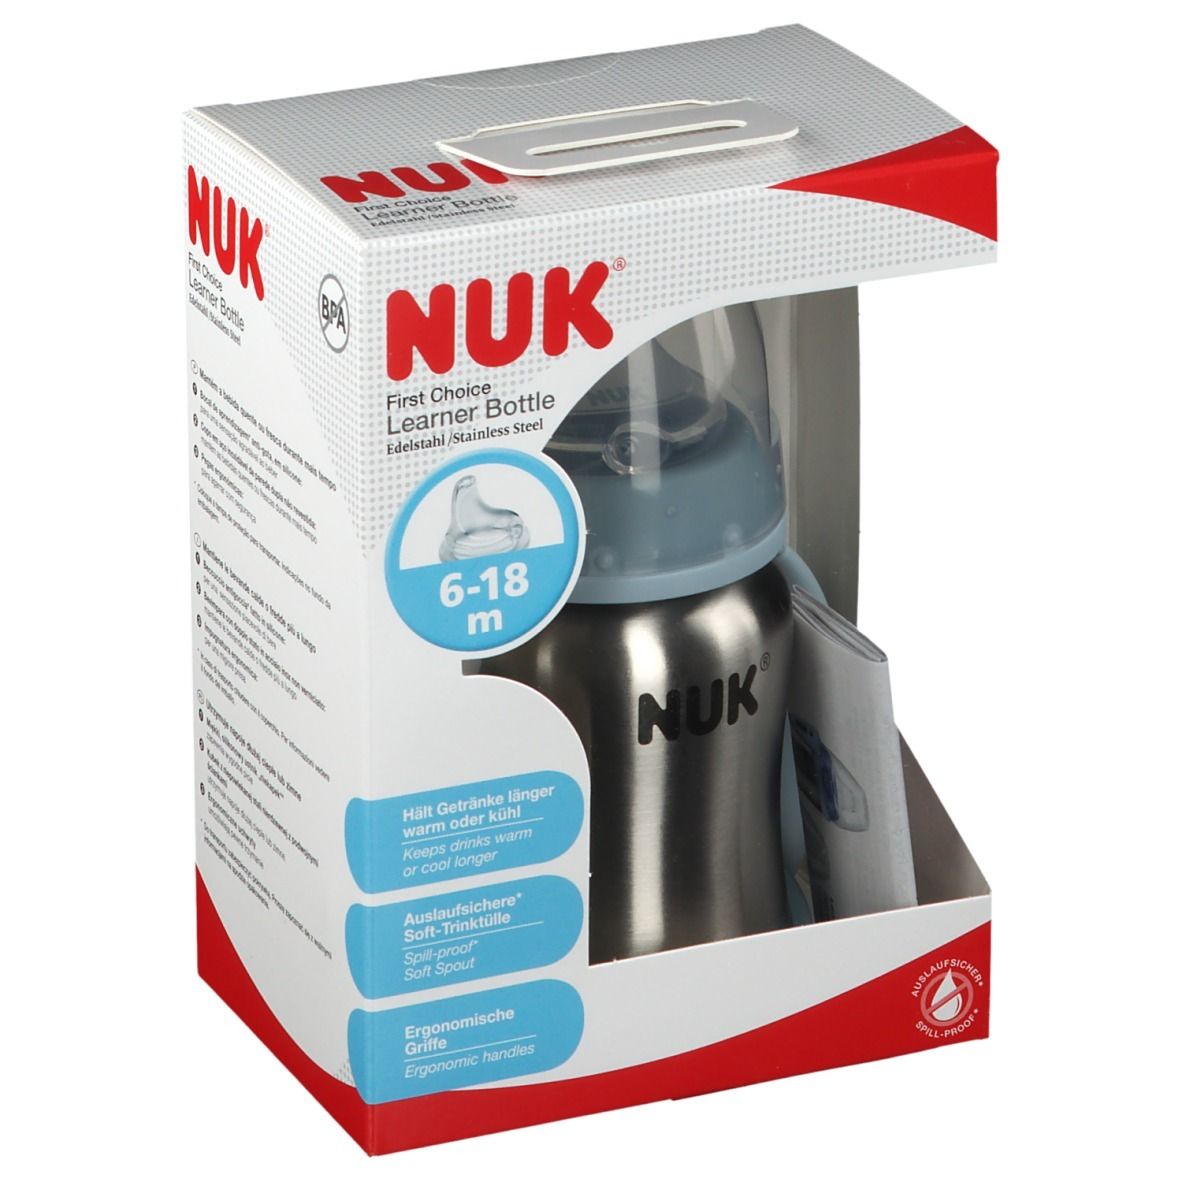 NUK First Choice Plus Learner Cup Edelstahl Trinklernflasche blau 125ml mit Griffen & Silikon Trinktülle, 6-18 Monate